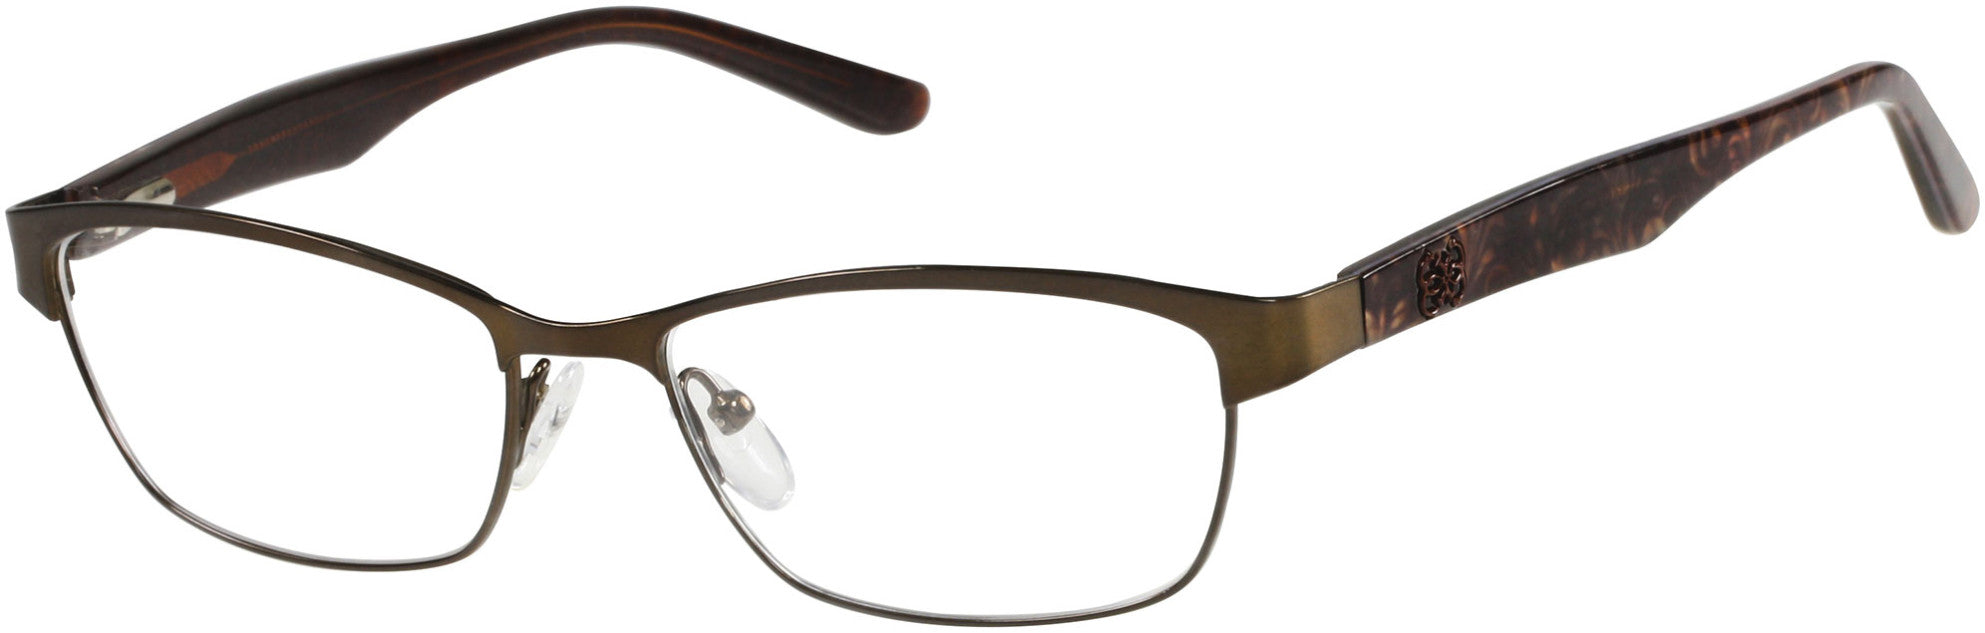 Guess GU2420 Eyeglasses D96-D96 - Brown